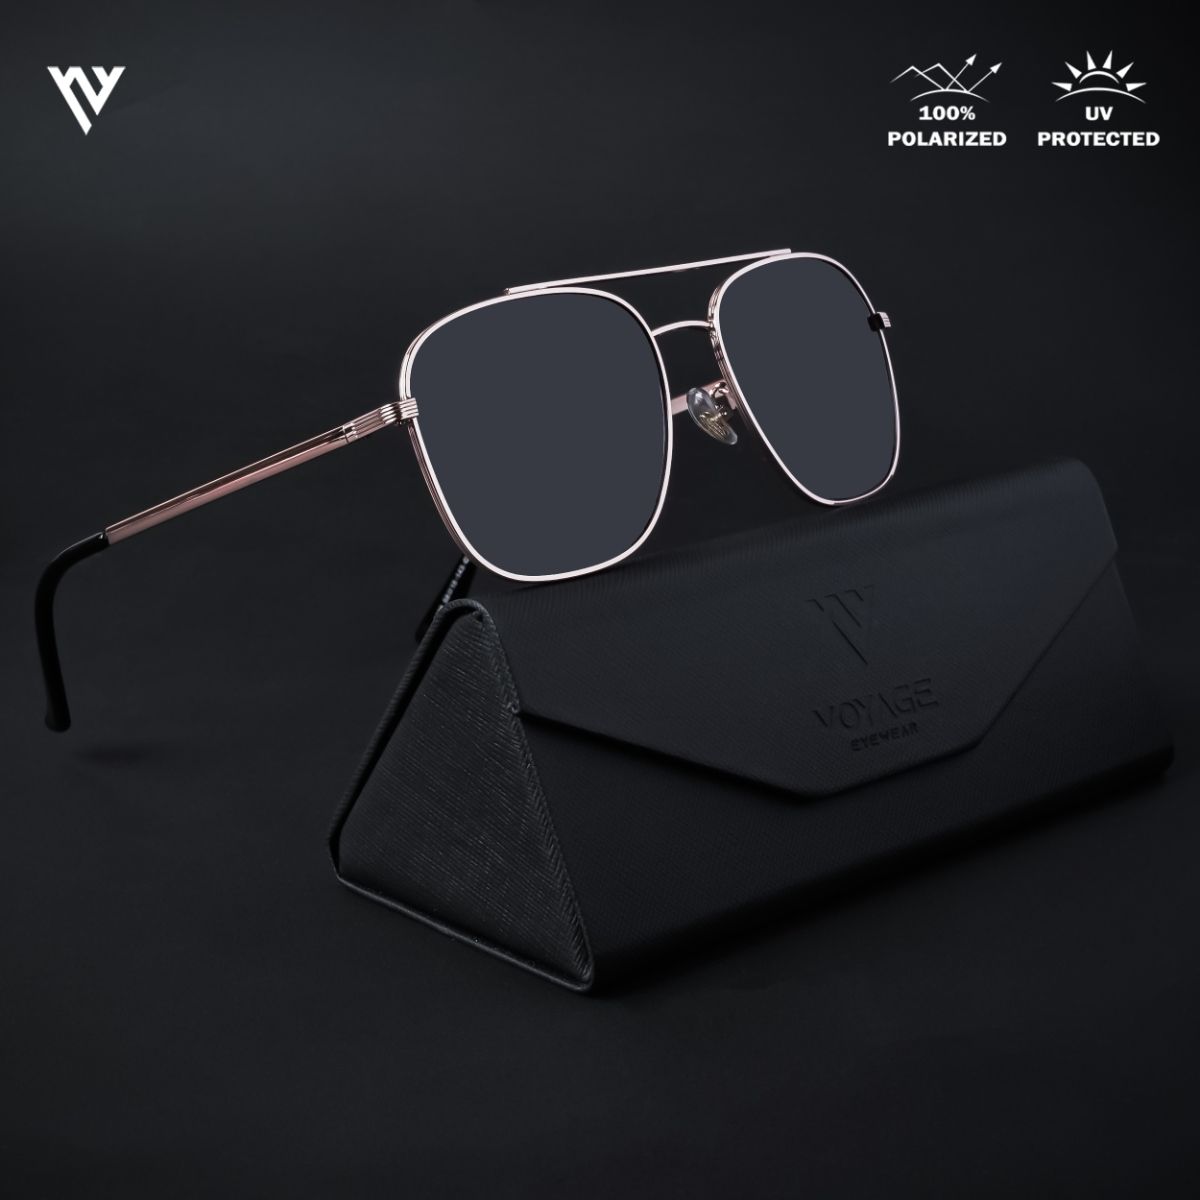 Buy Voyage Grey Wayfarer Sunglasses for Men & Women - 2337Mg3873 (58) online